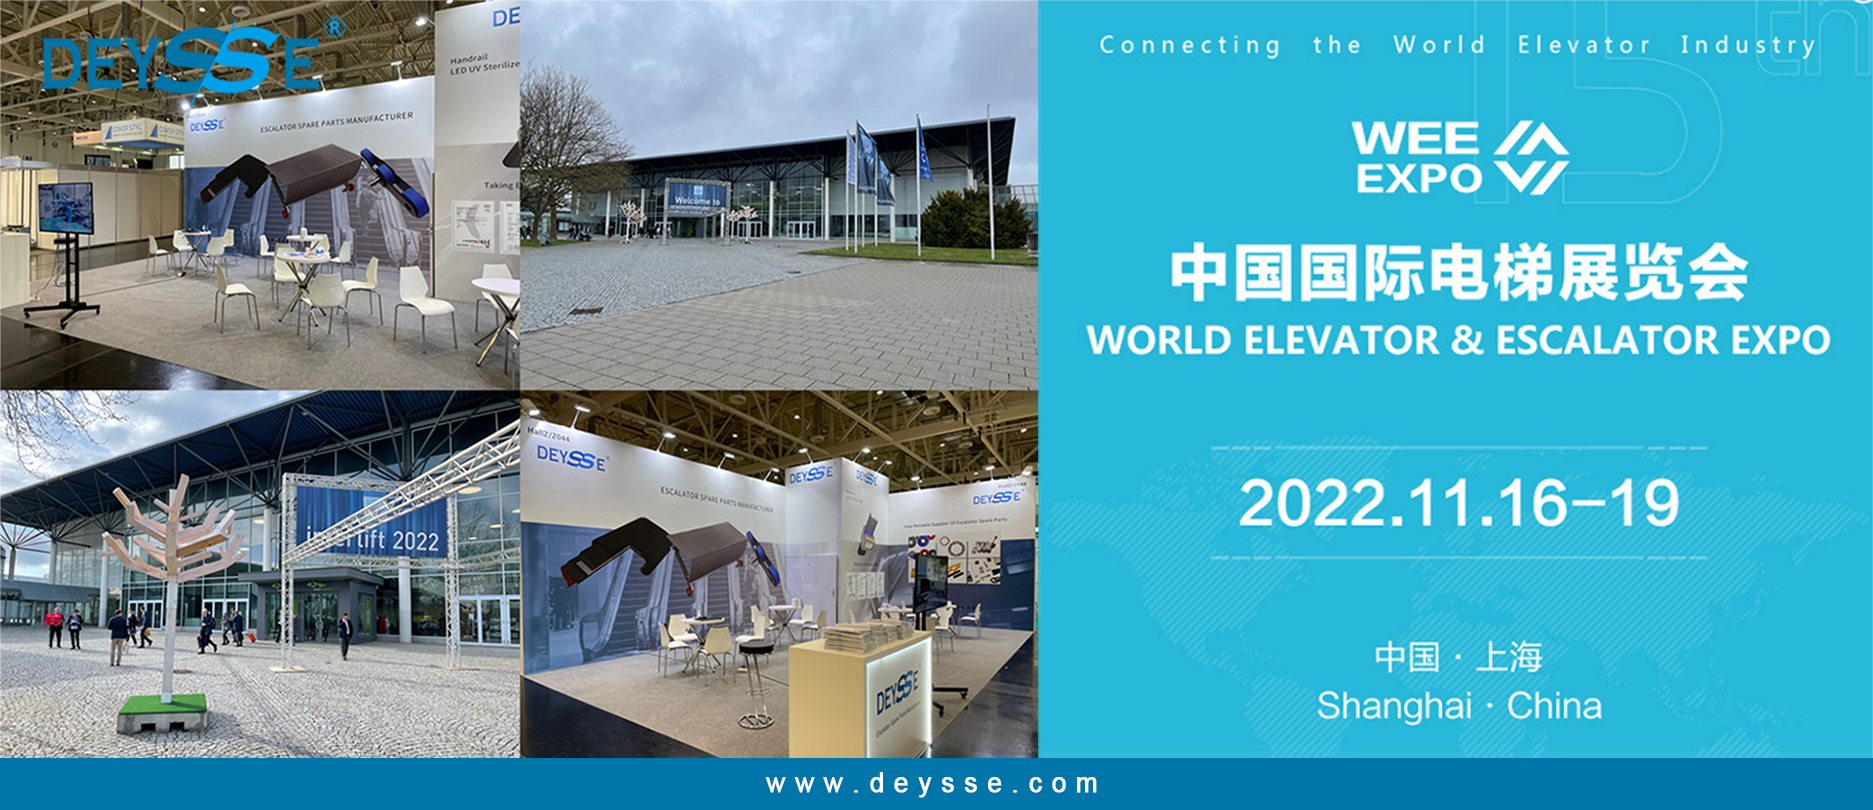 Meet you at the World Elevator & Escalator Expo 2022